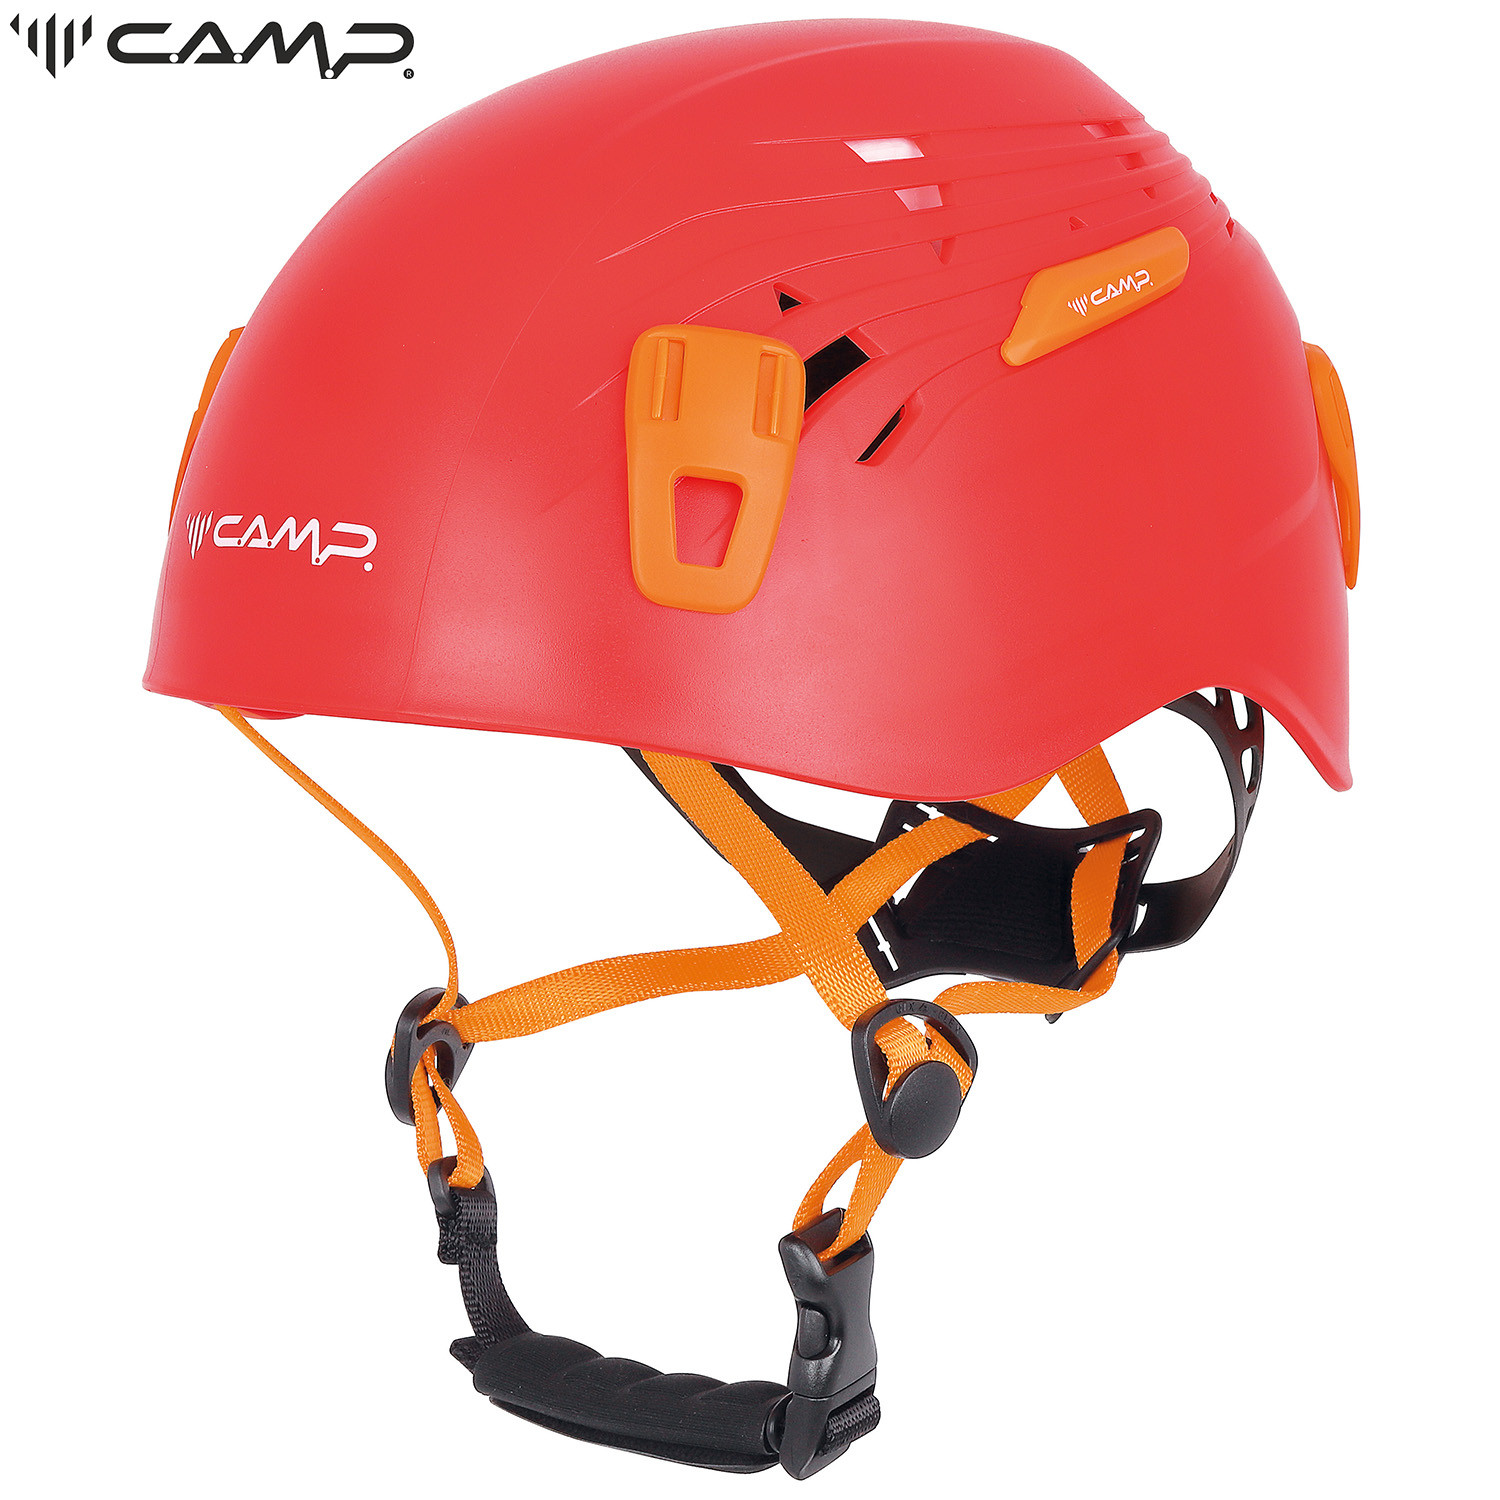 Camp Titan Helmet for Rock Climbing, Wall Climbing & Mountaineering